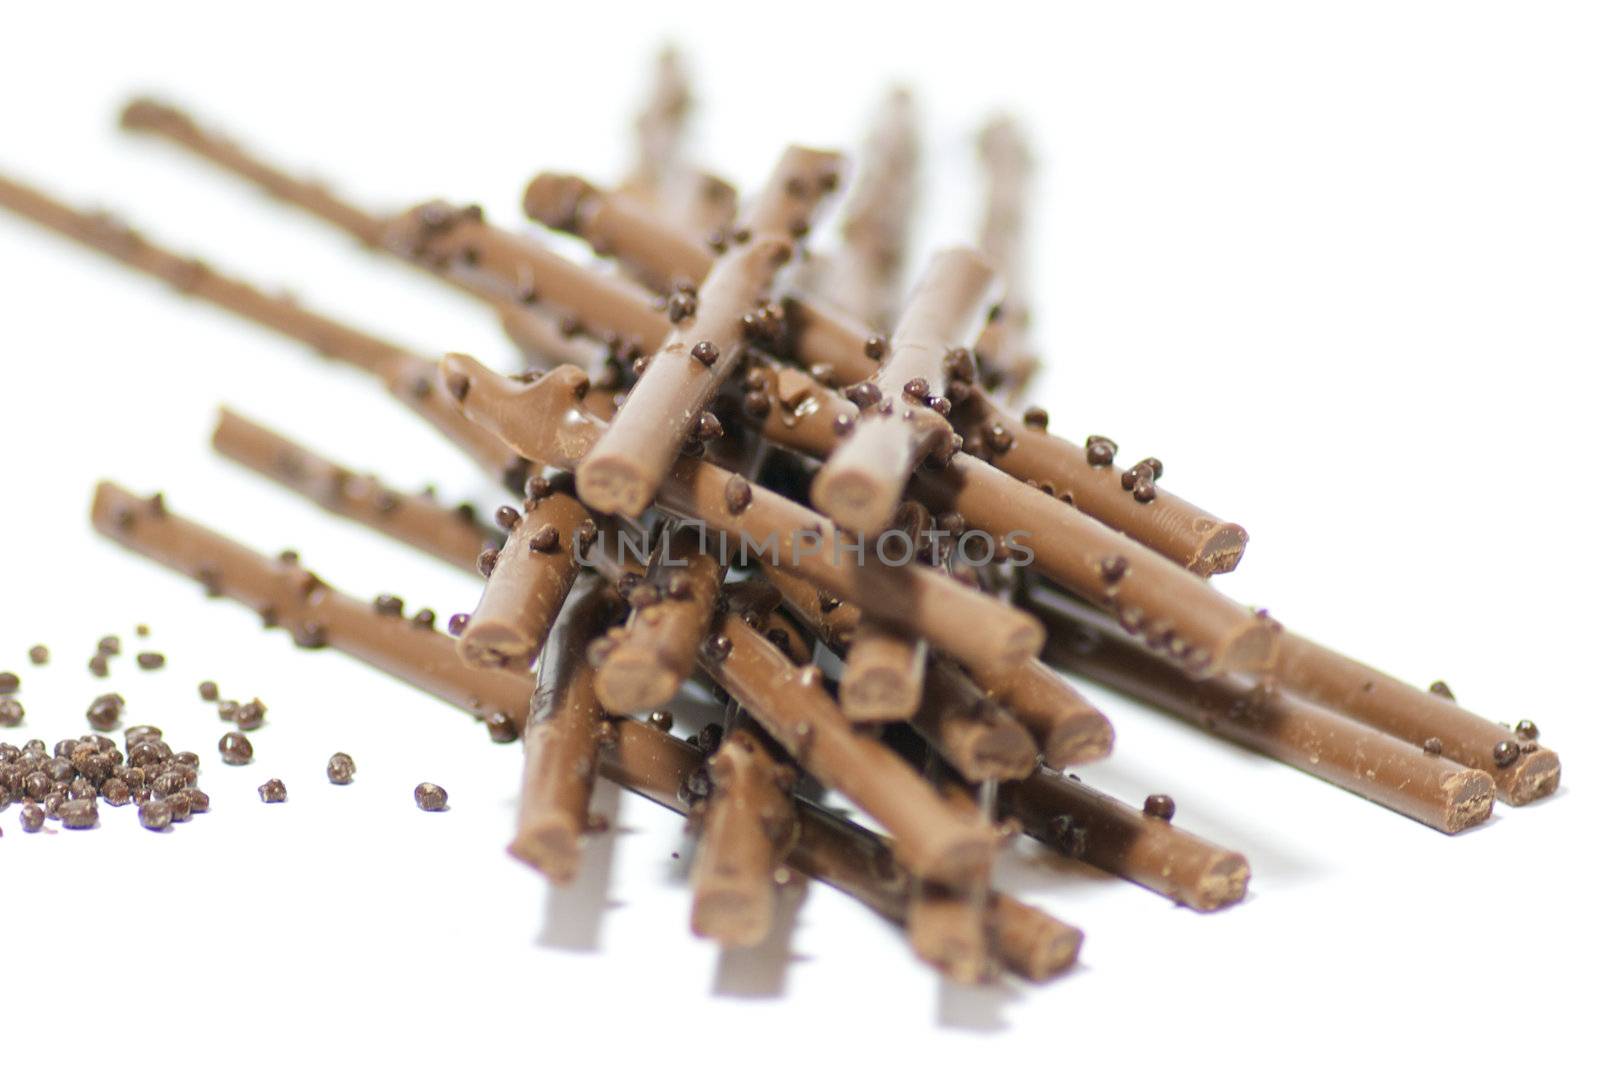 Chocolate sticks with chocolate granules by zhekos